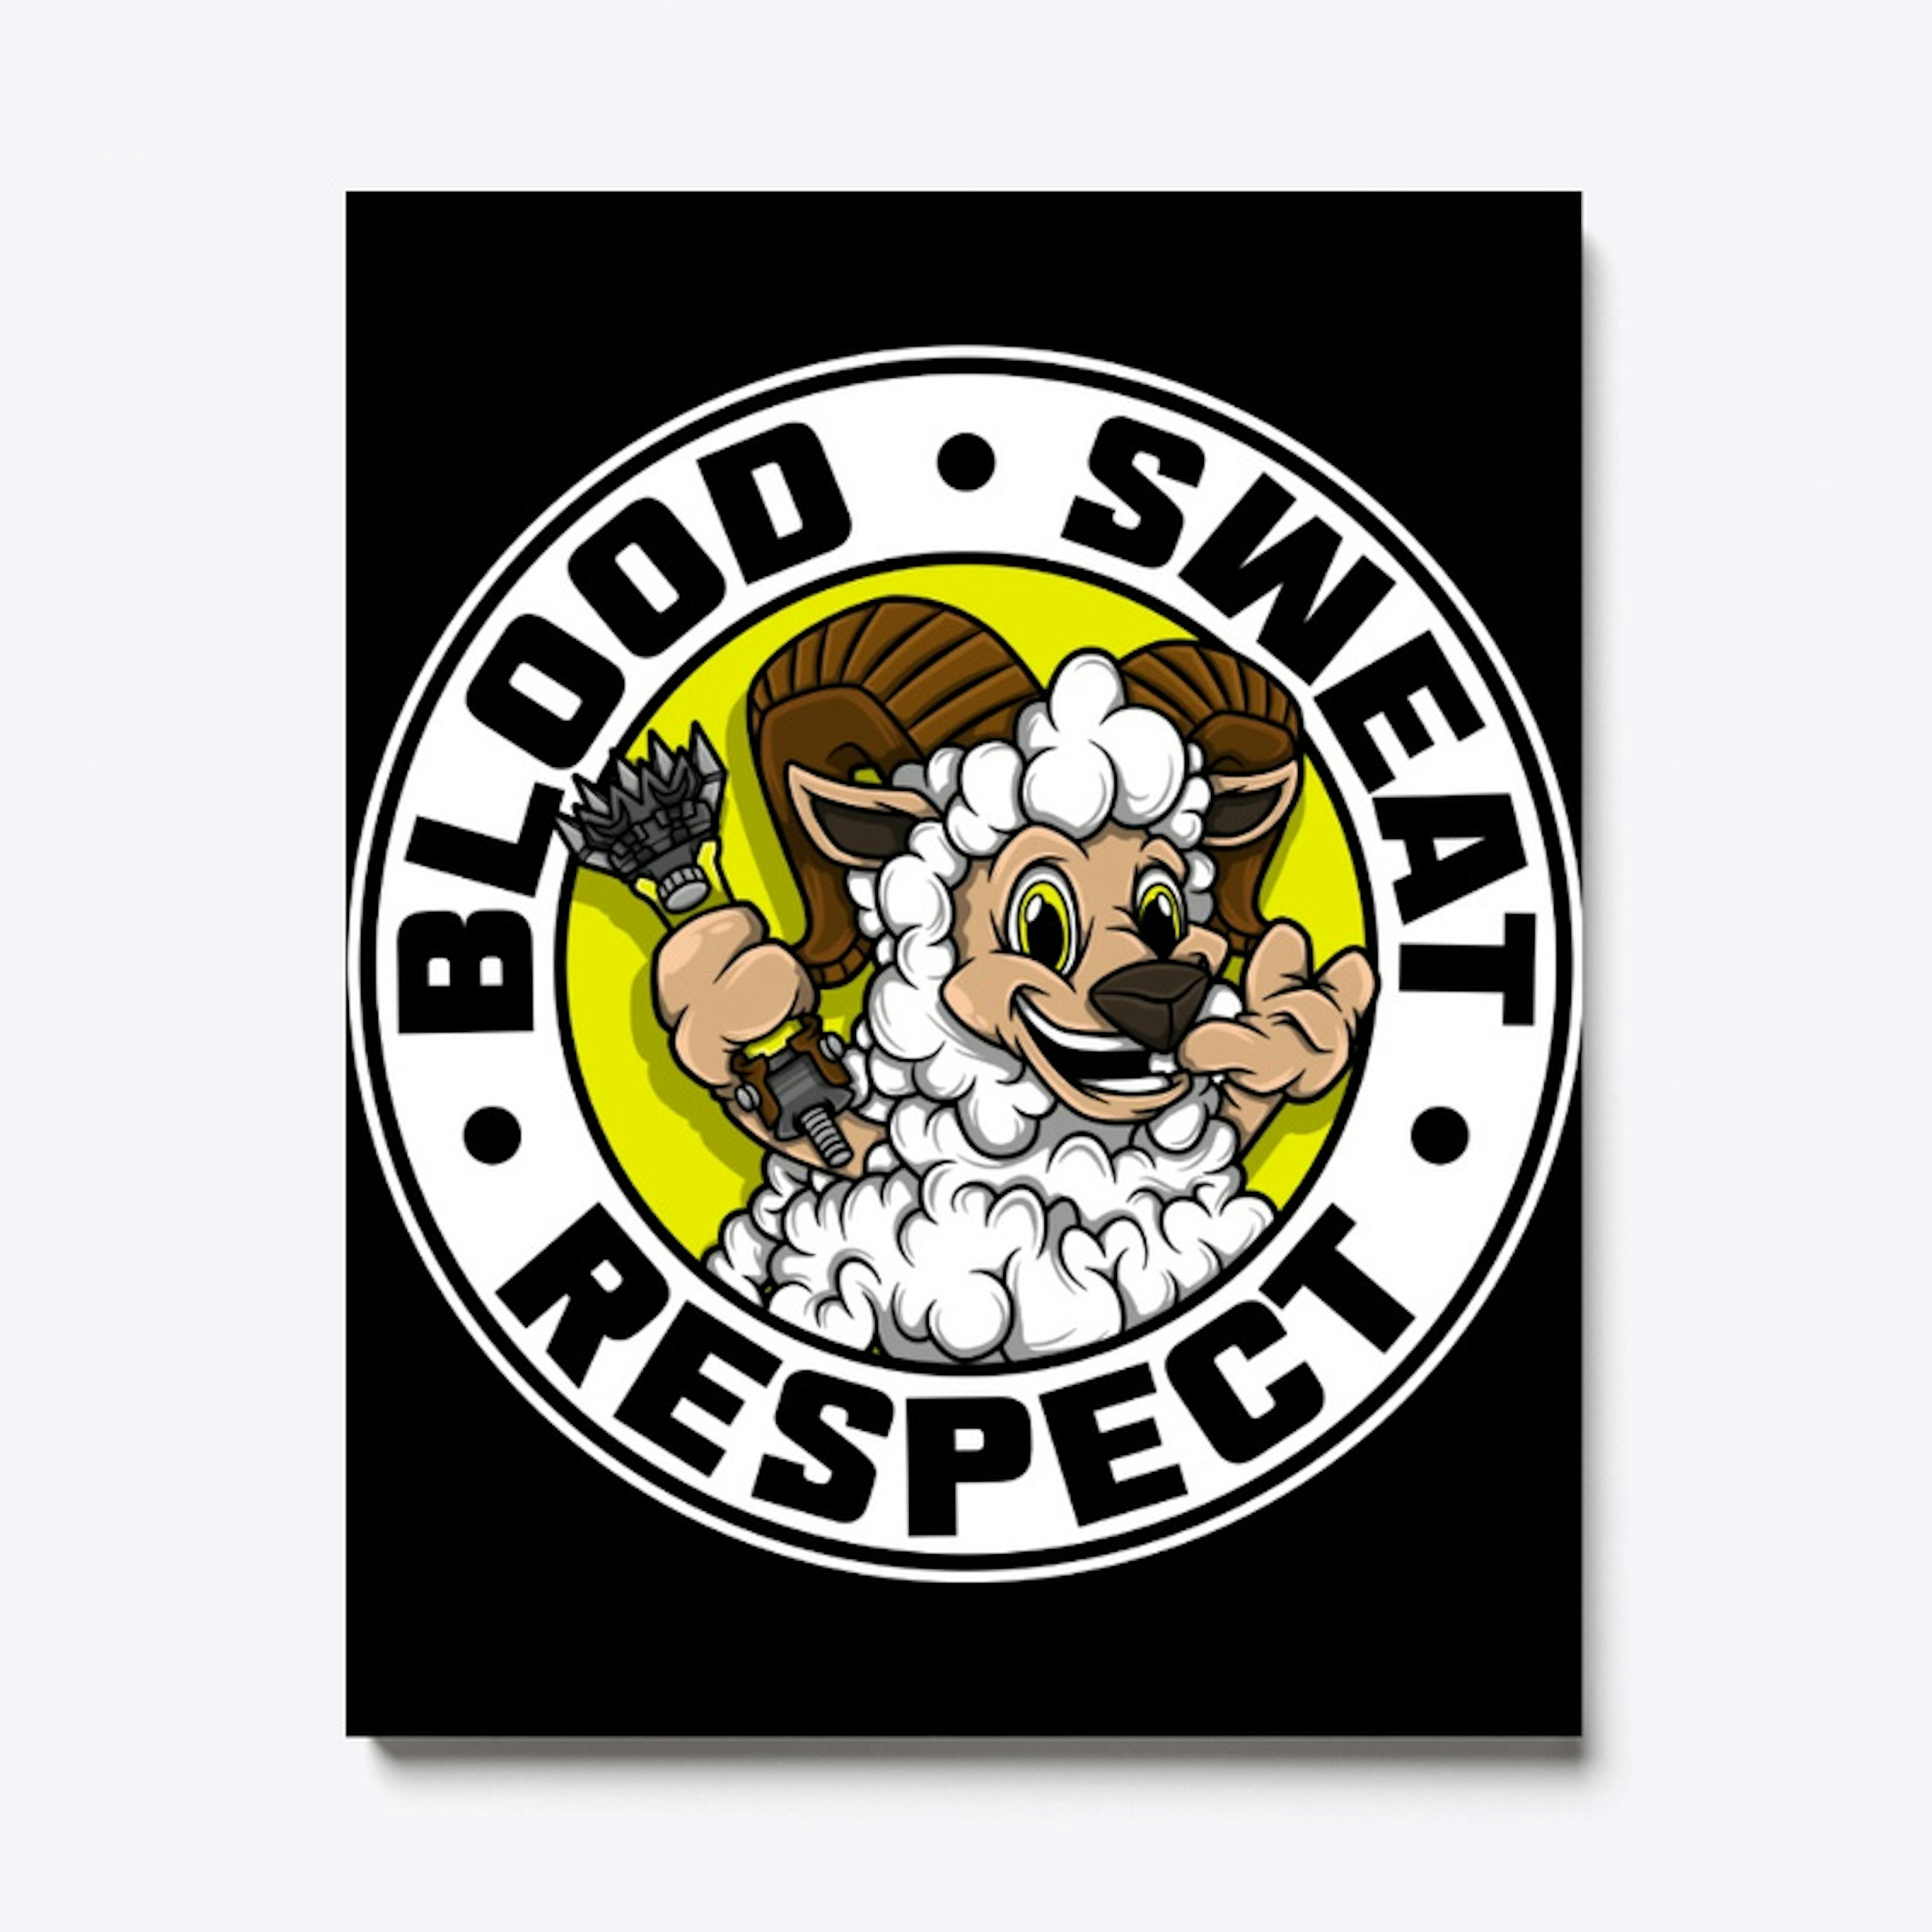 BLOOD-SWEAT-RESPECT - Shearing Apparel